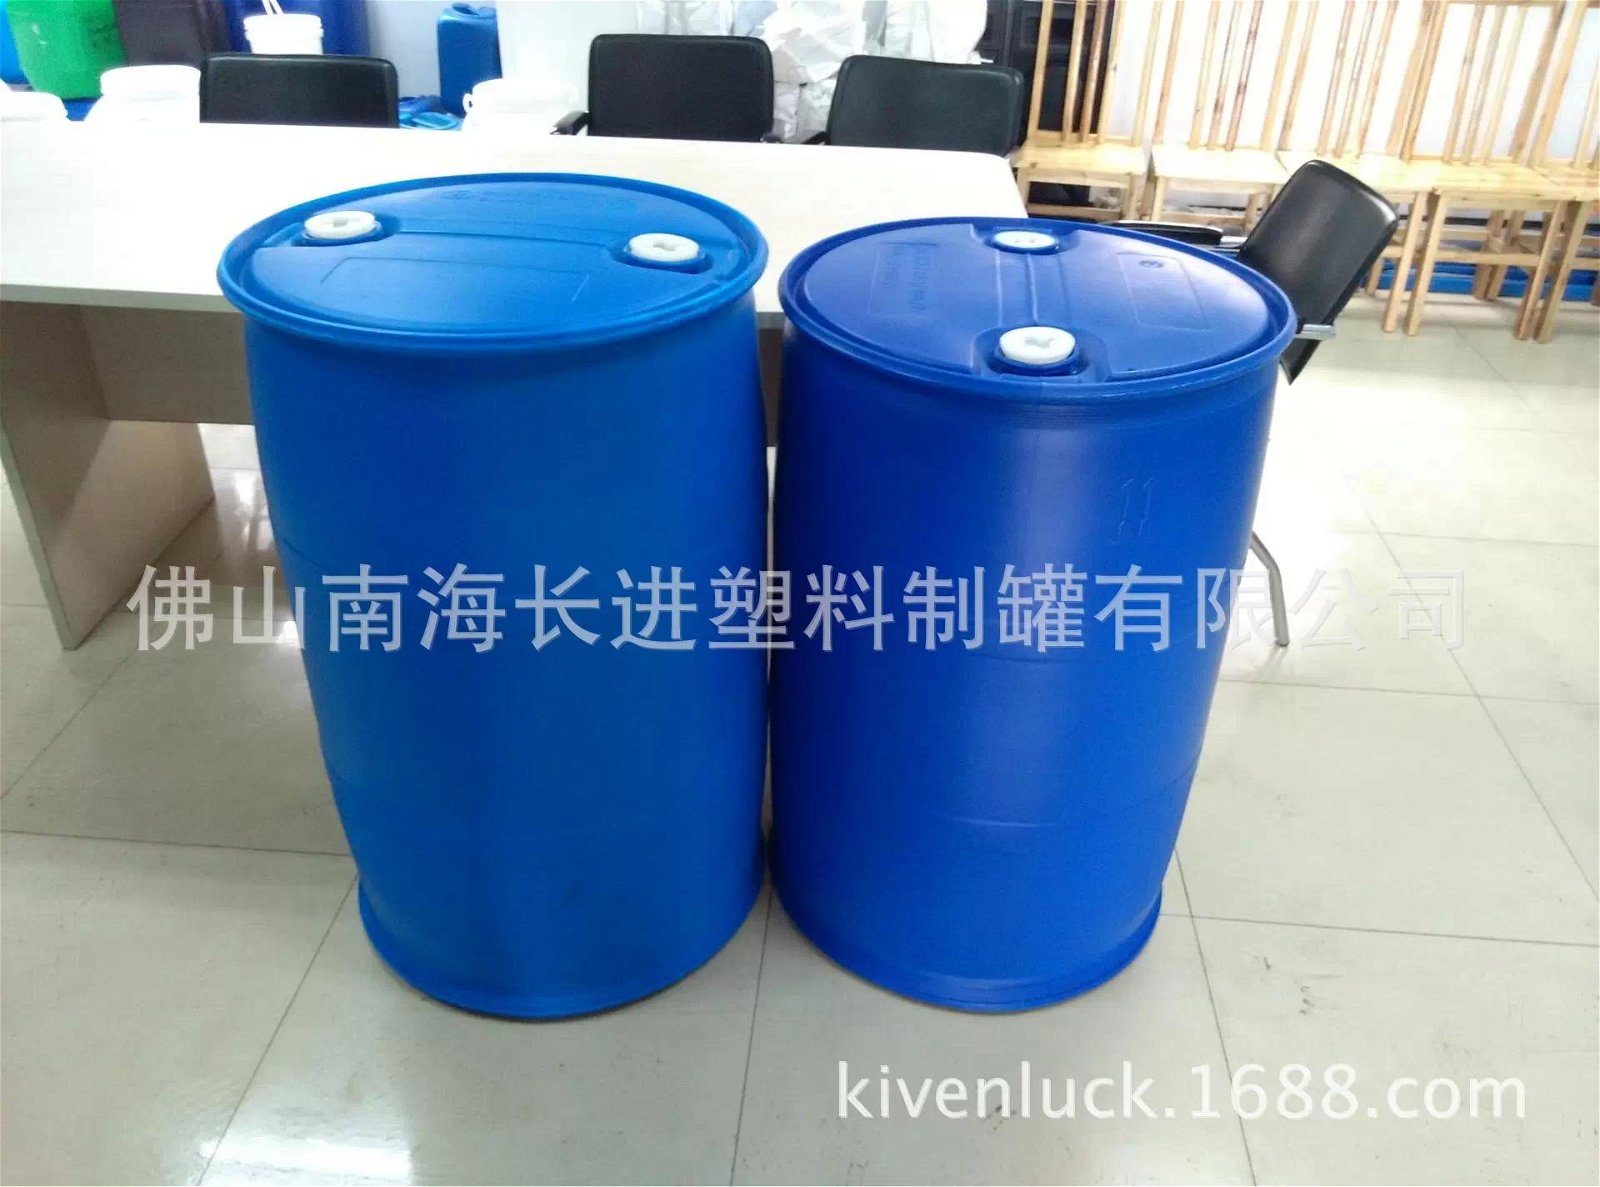 200kg blue double ring barrel